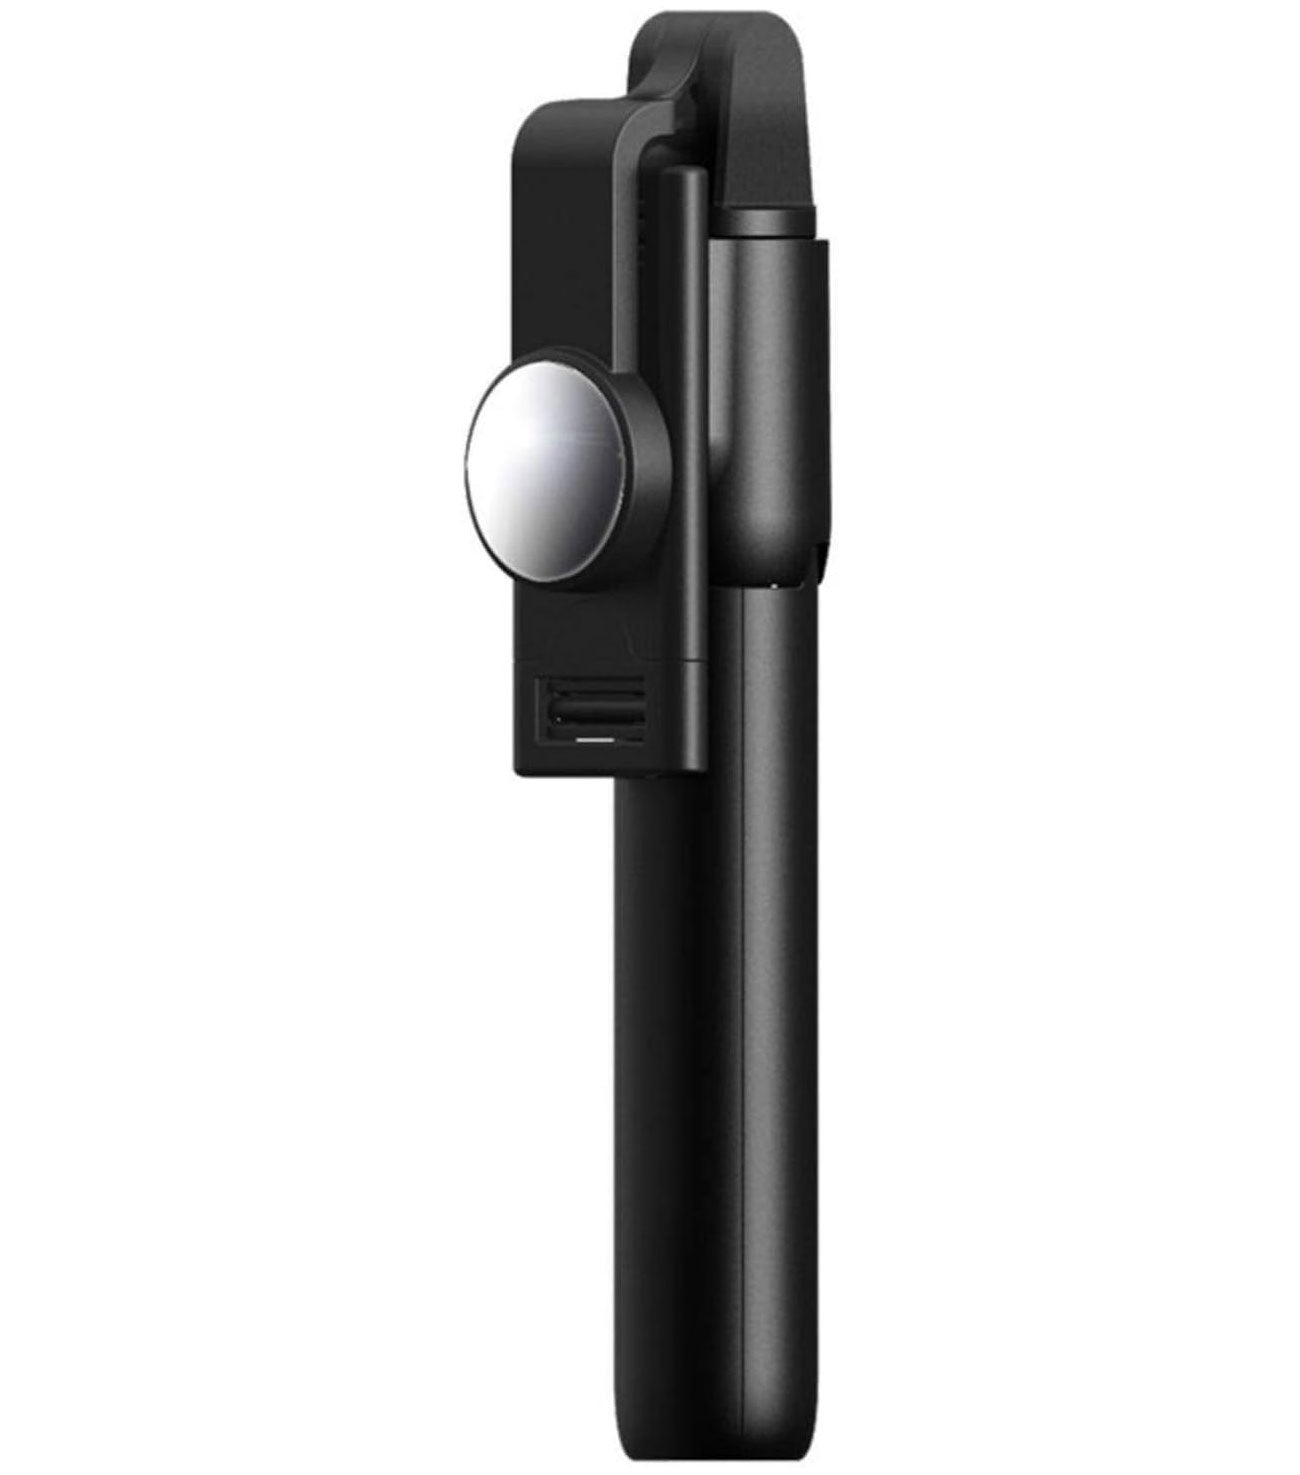  Selfie Stick ,   Self-Portrait  Stand  Remote Shutter   Built-in Tripod  Wireless  - NWG32 1989-3